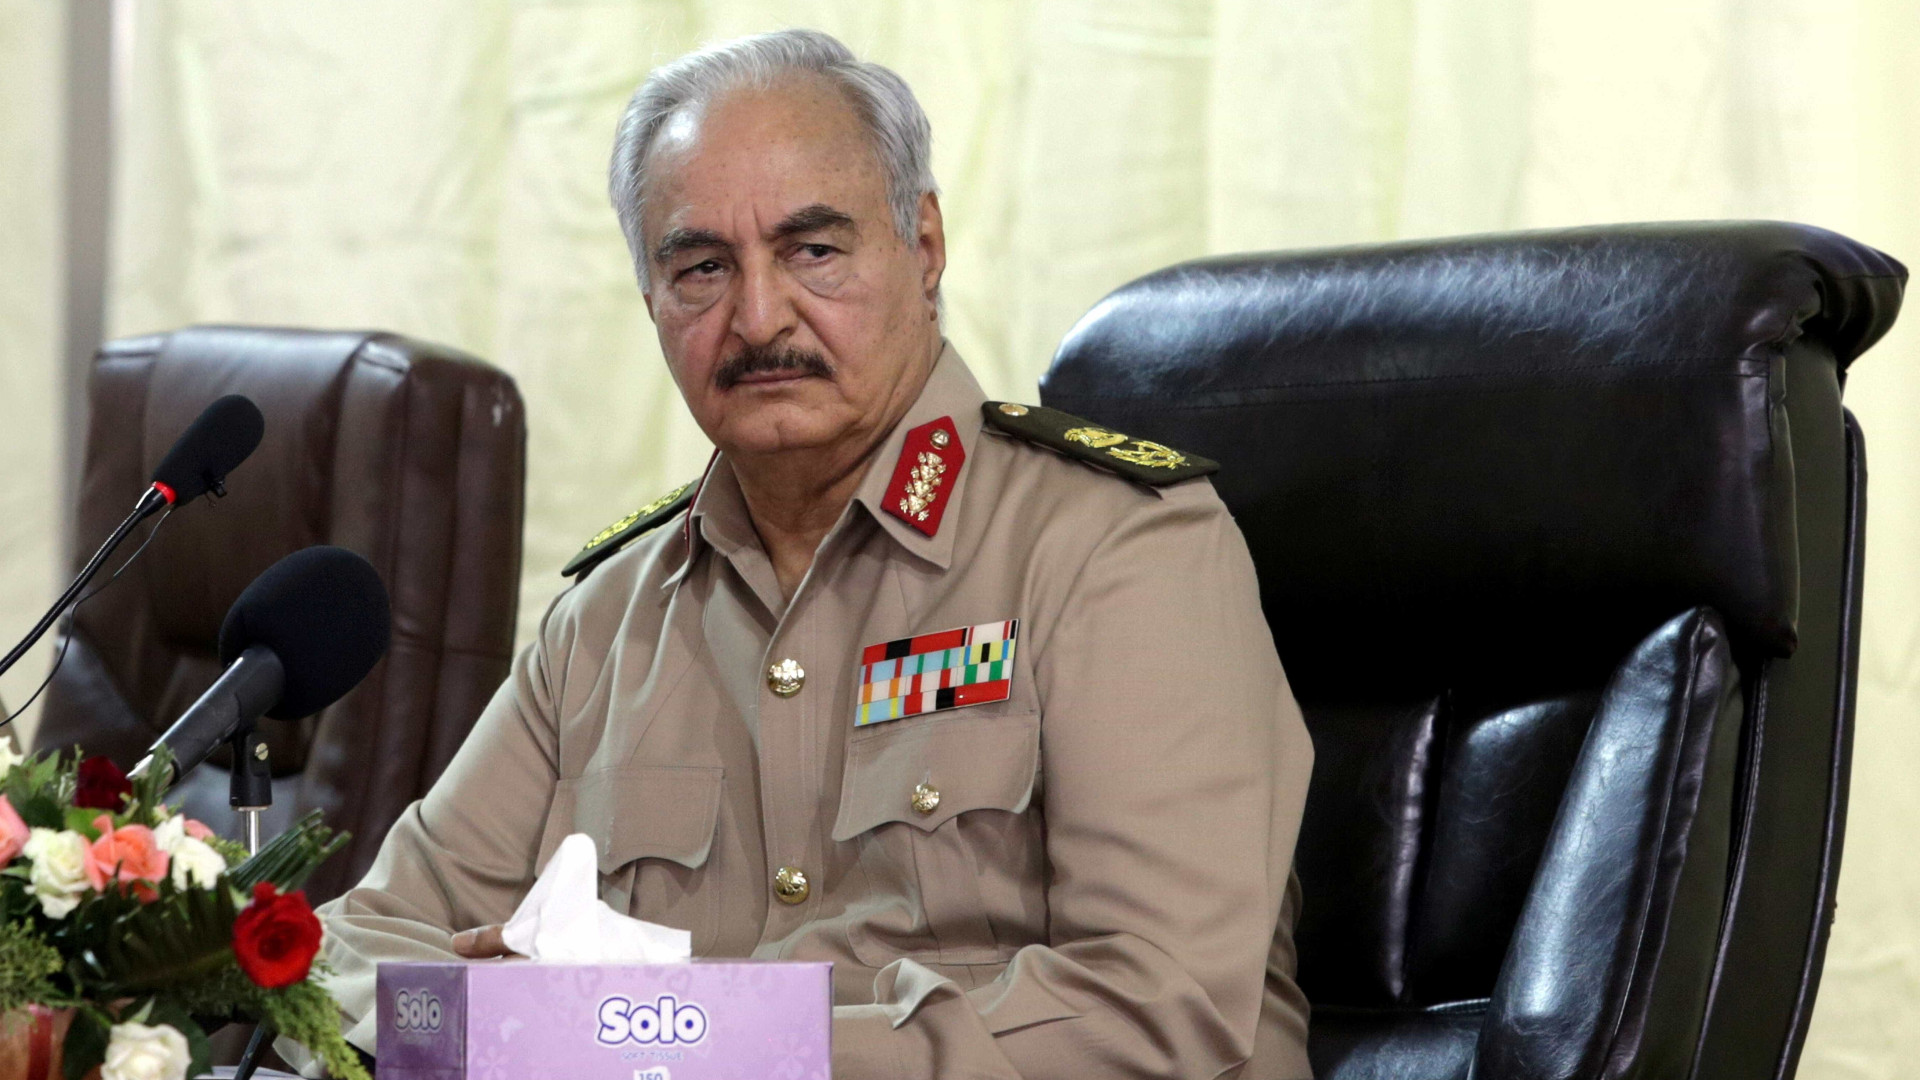 Morre general líbio Khalifa Haftar, diz jornal